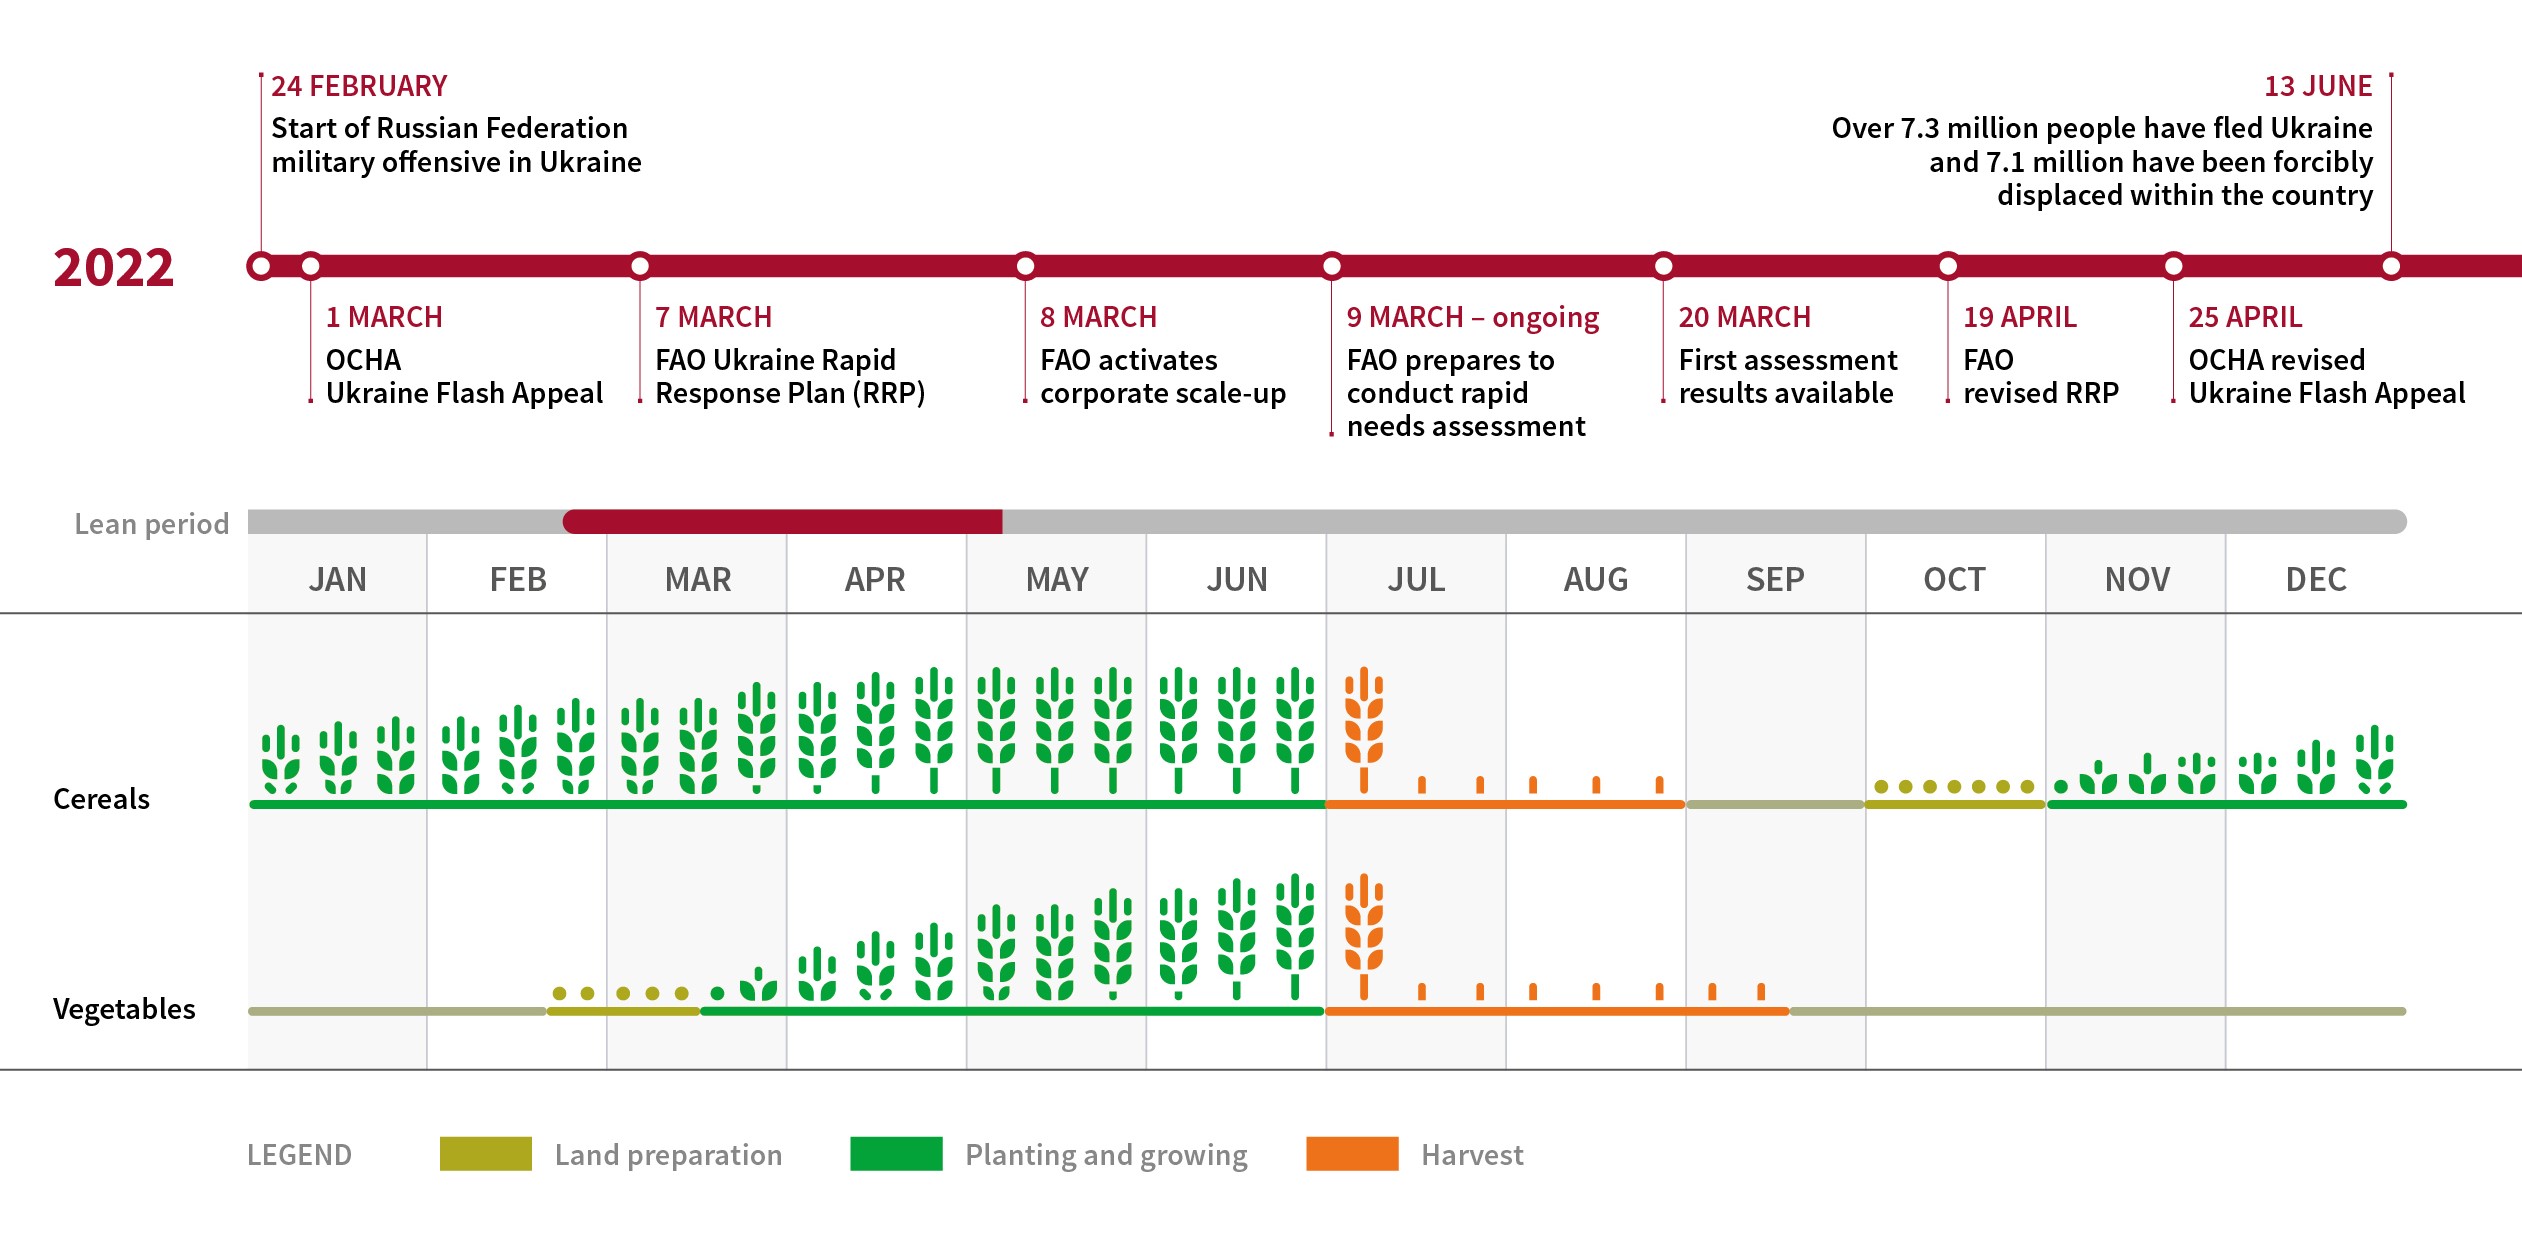 Timeline of response against crop calendar